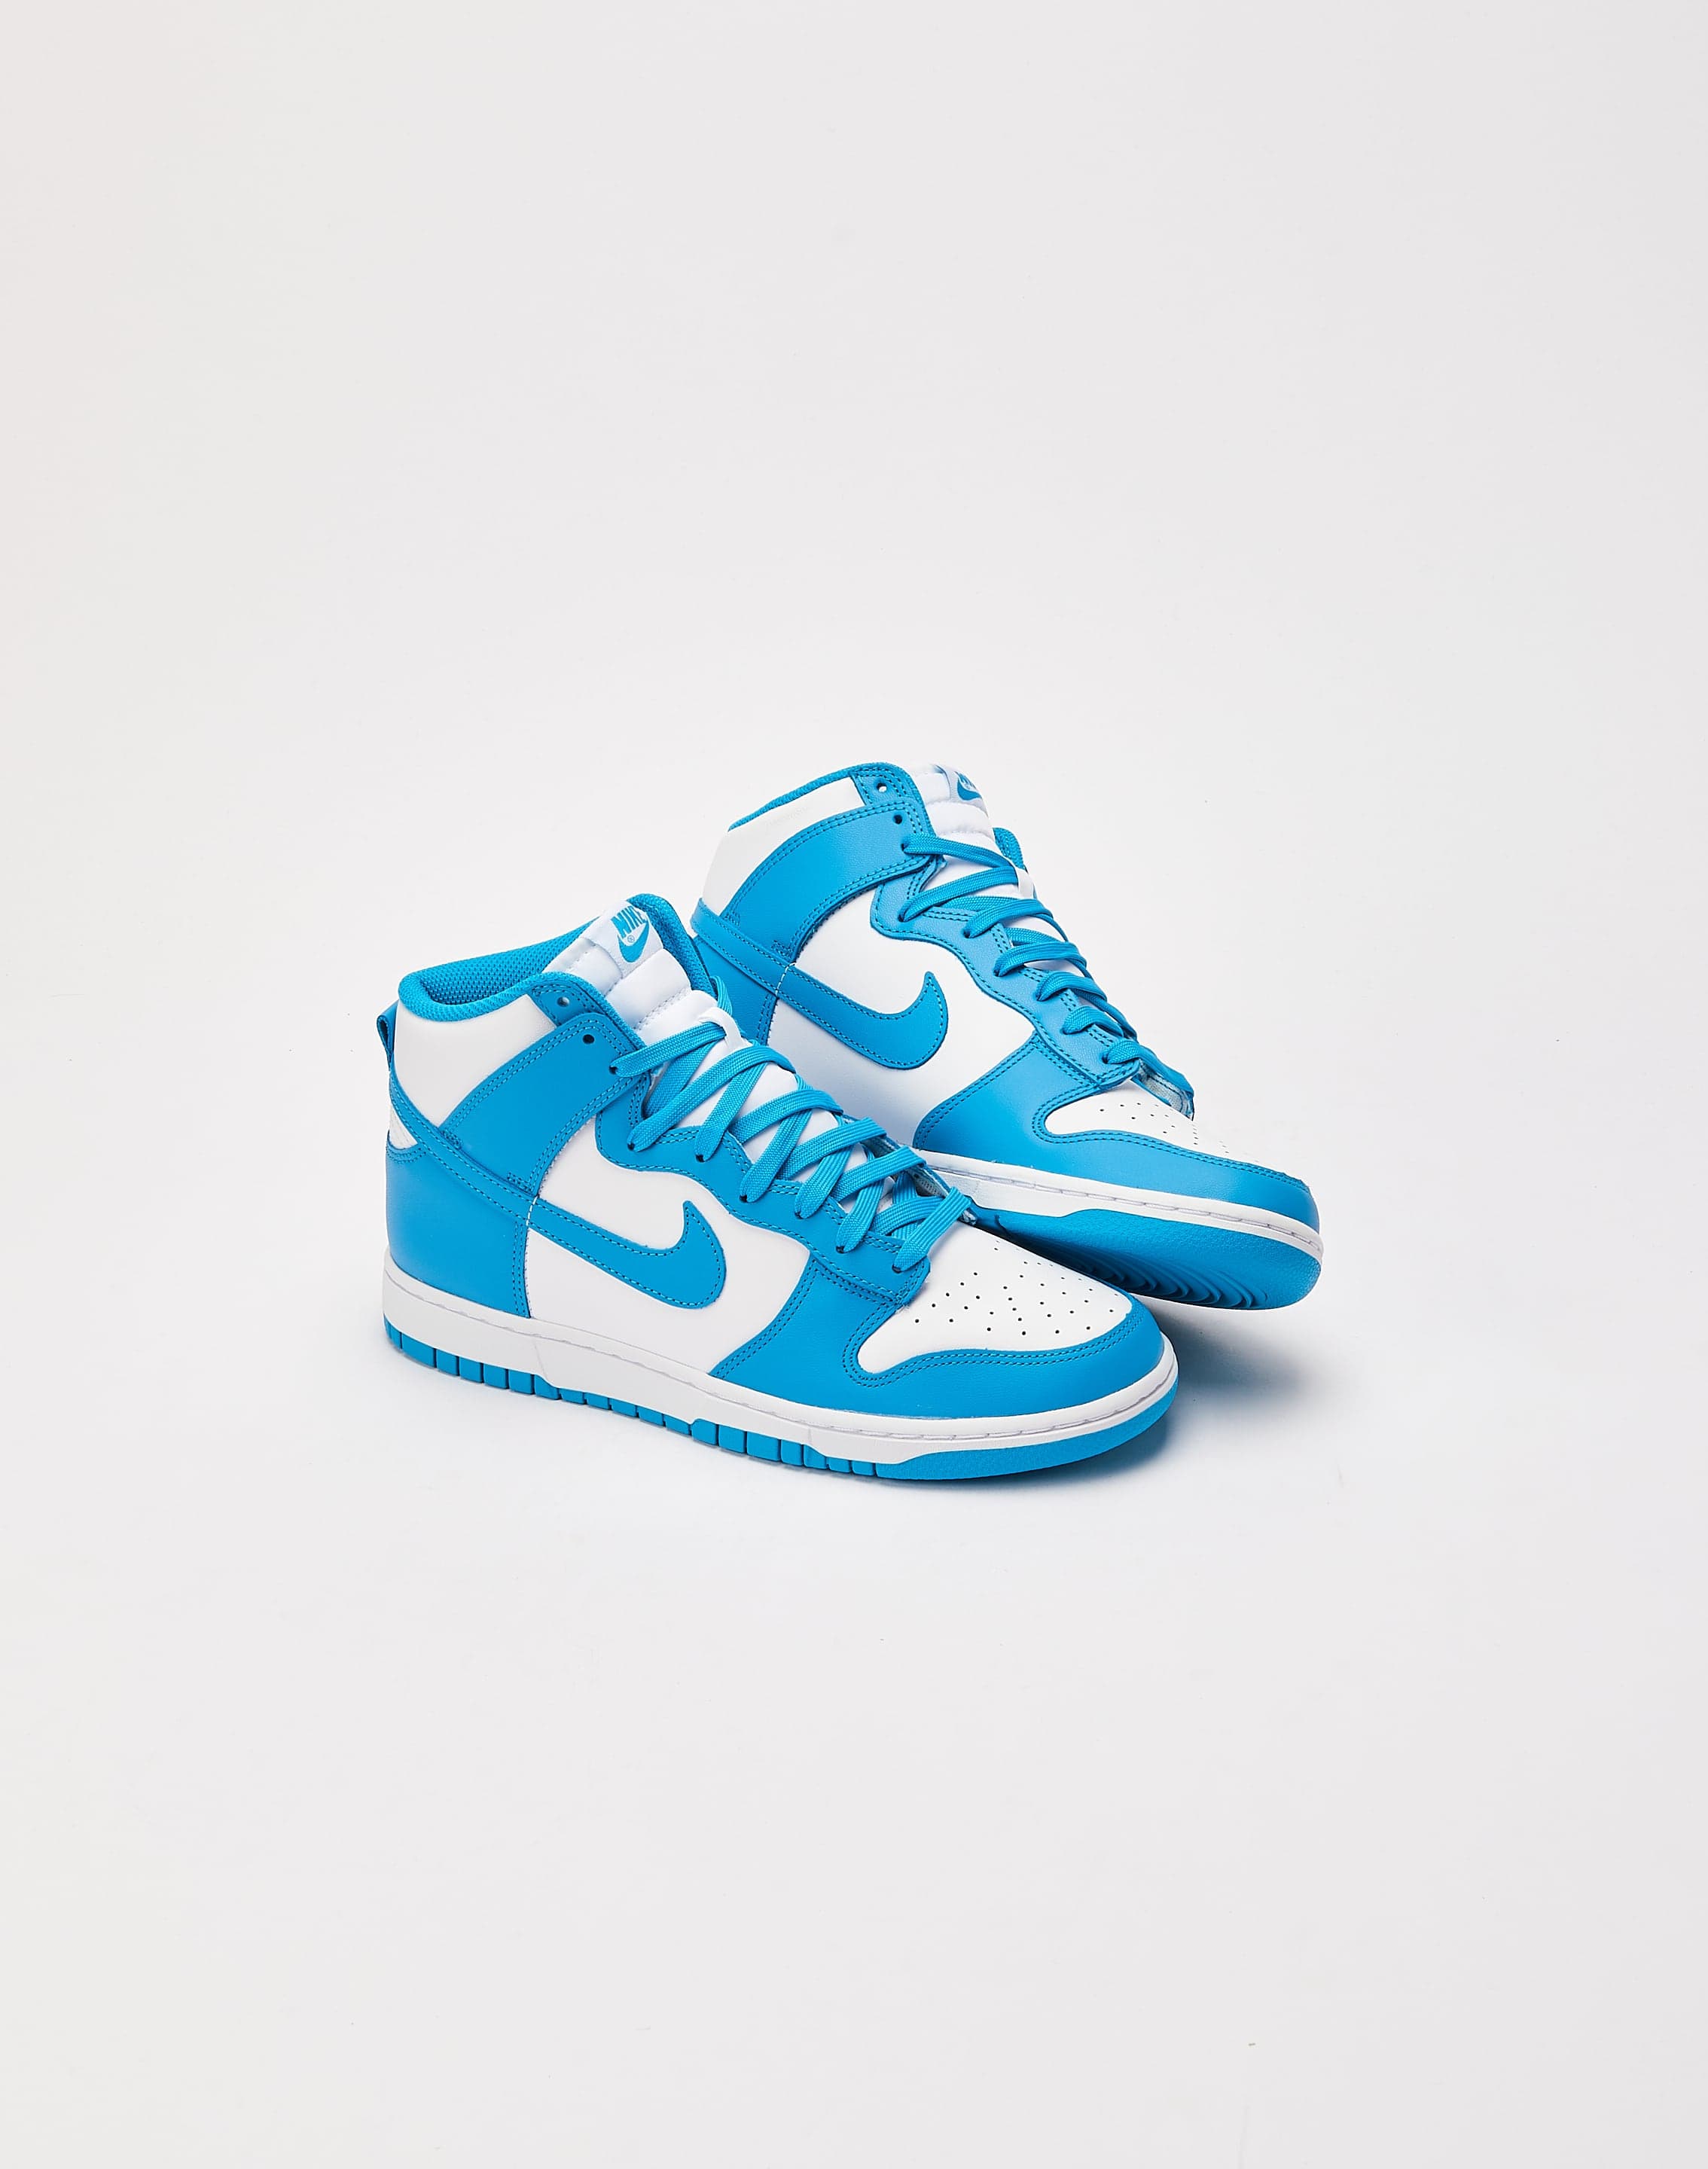 Nike Dunk High White Blue DD1399-400 Release Date